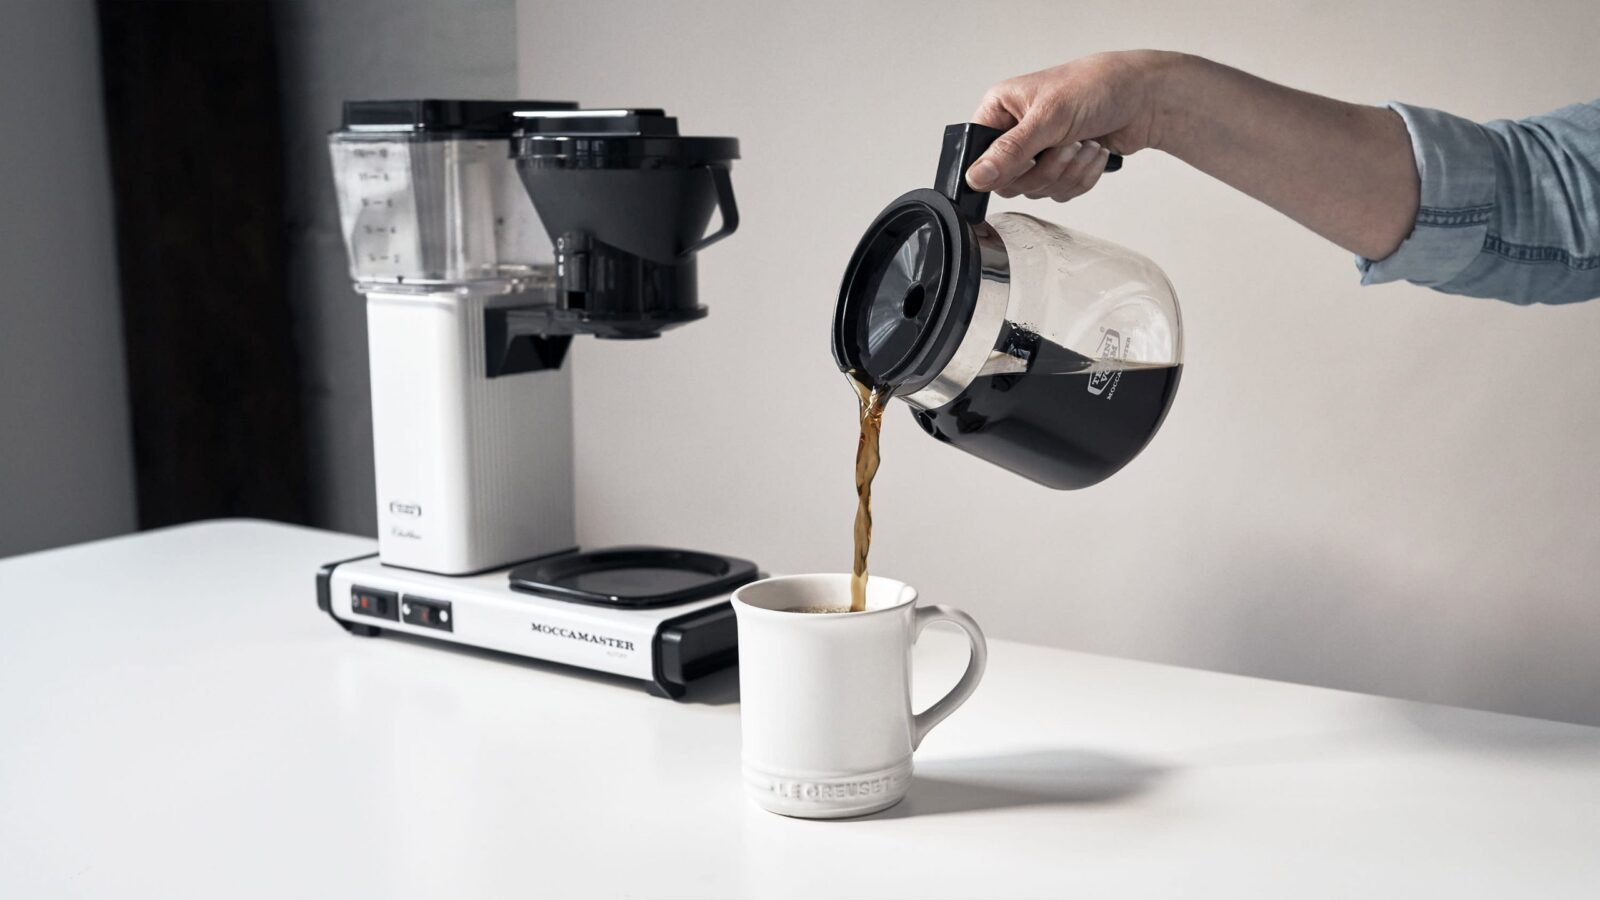 05 TRD20 Coffee Maker Pour scaled - Colombia кофе для френч пресса 37,5 гр.